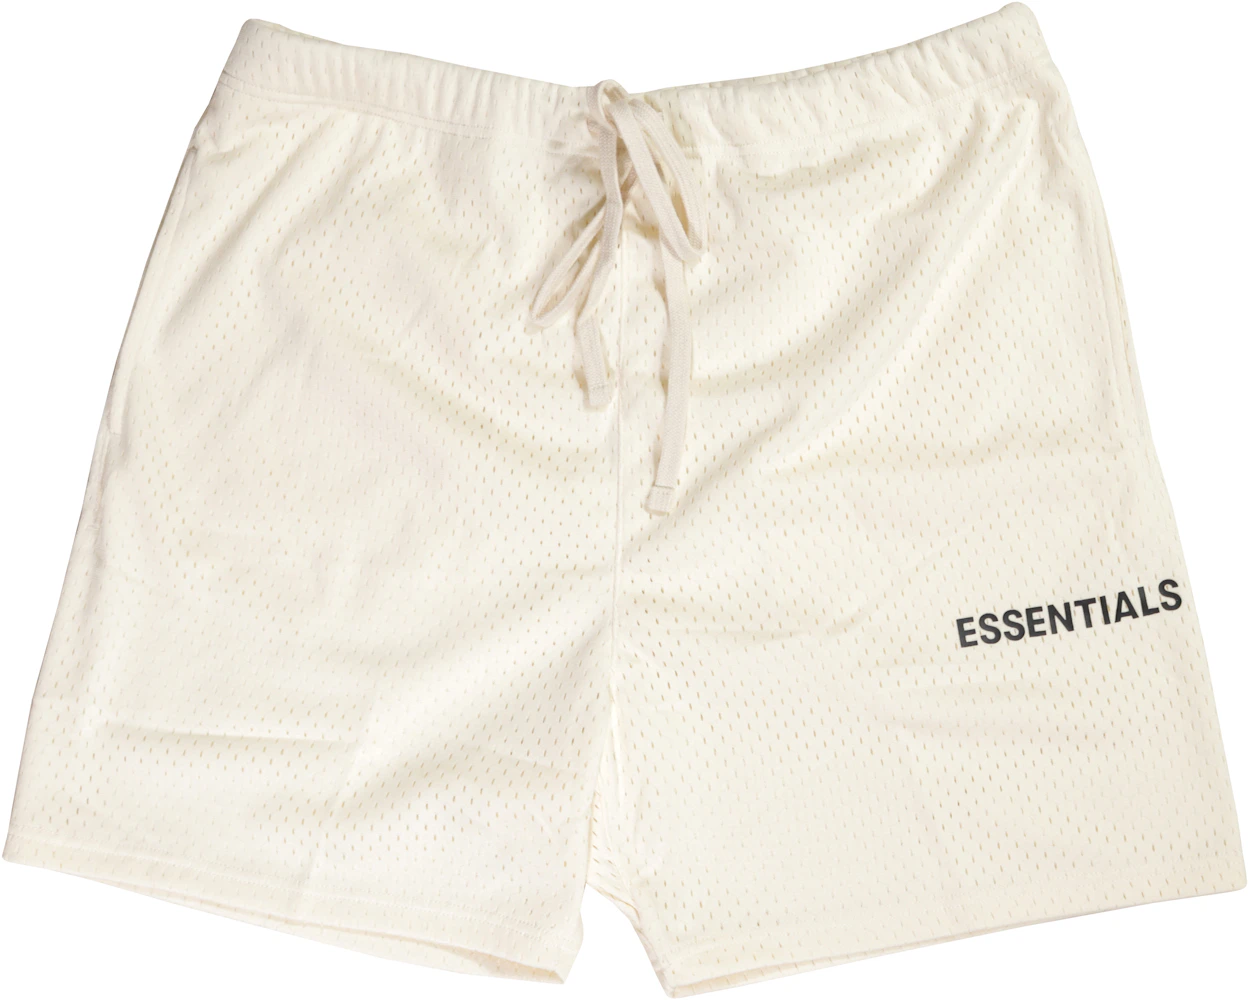 Fear of God Essentials Graphic Sweat Shorts Cream Men's - Essentials - US